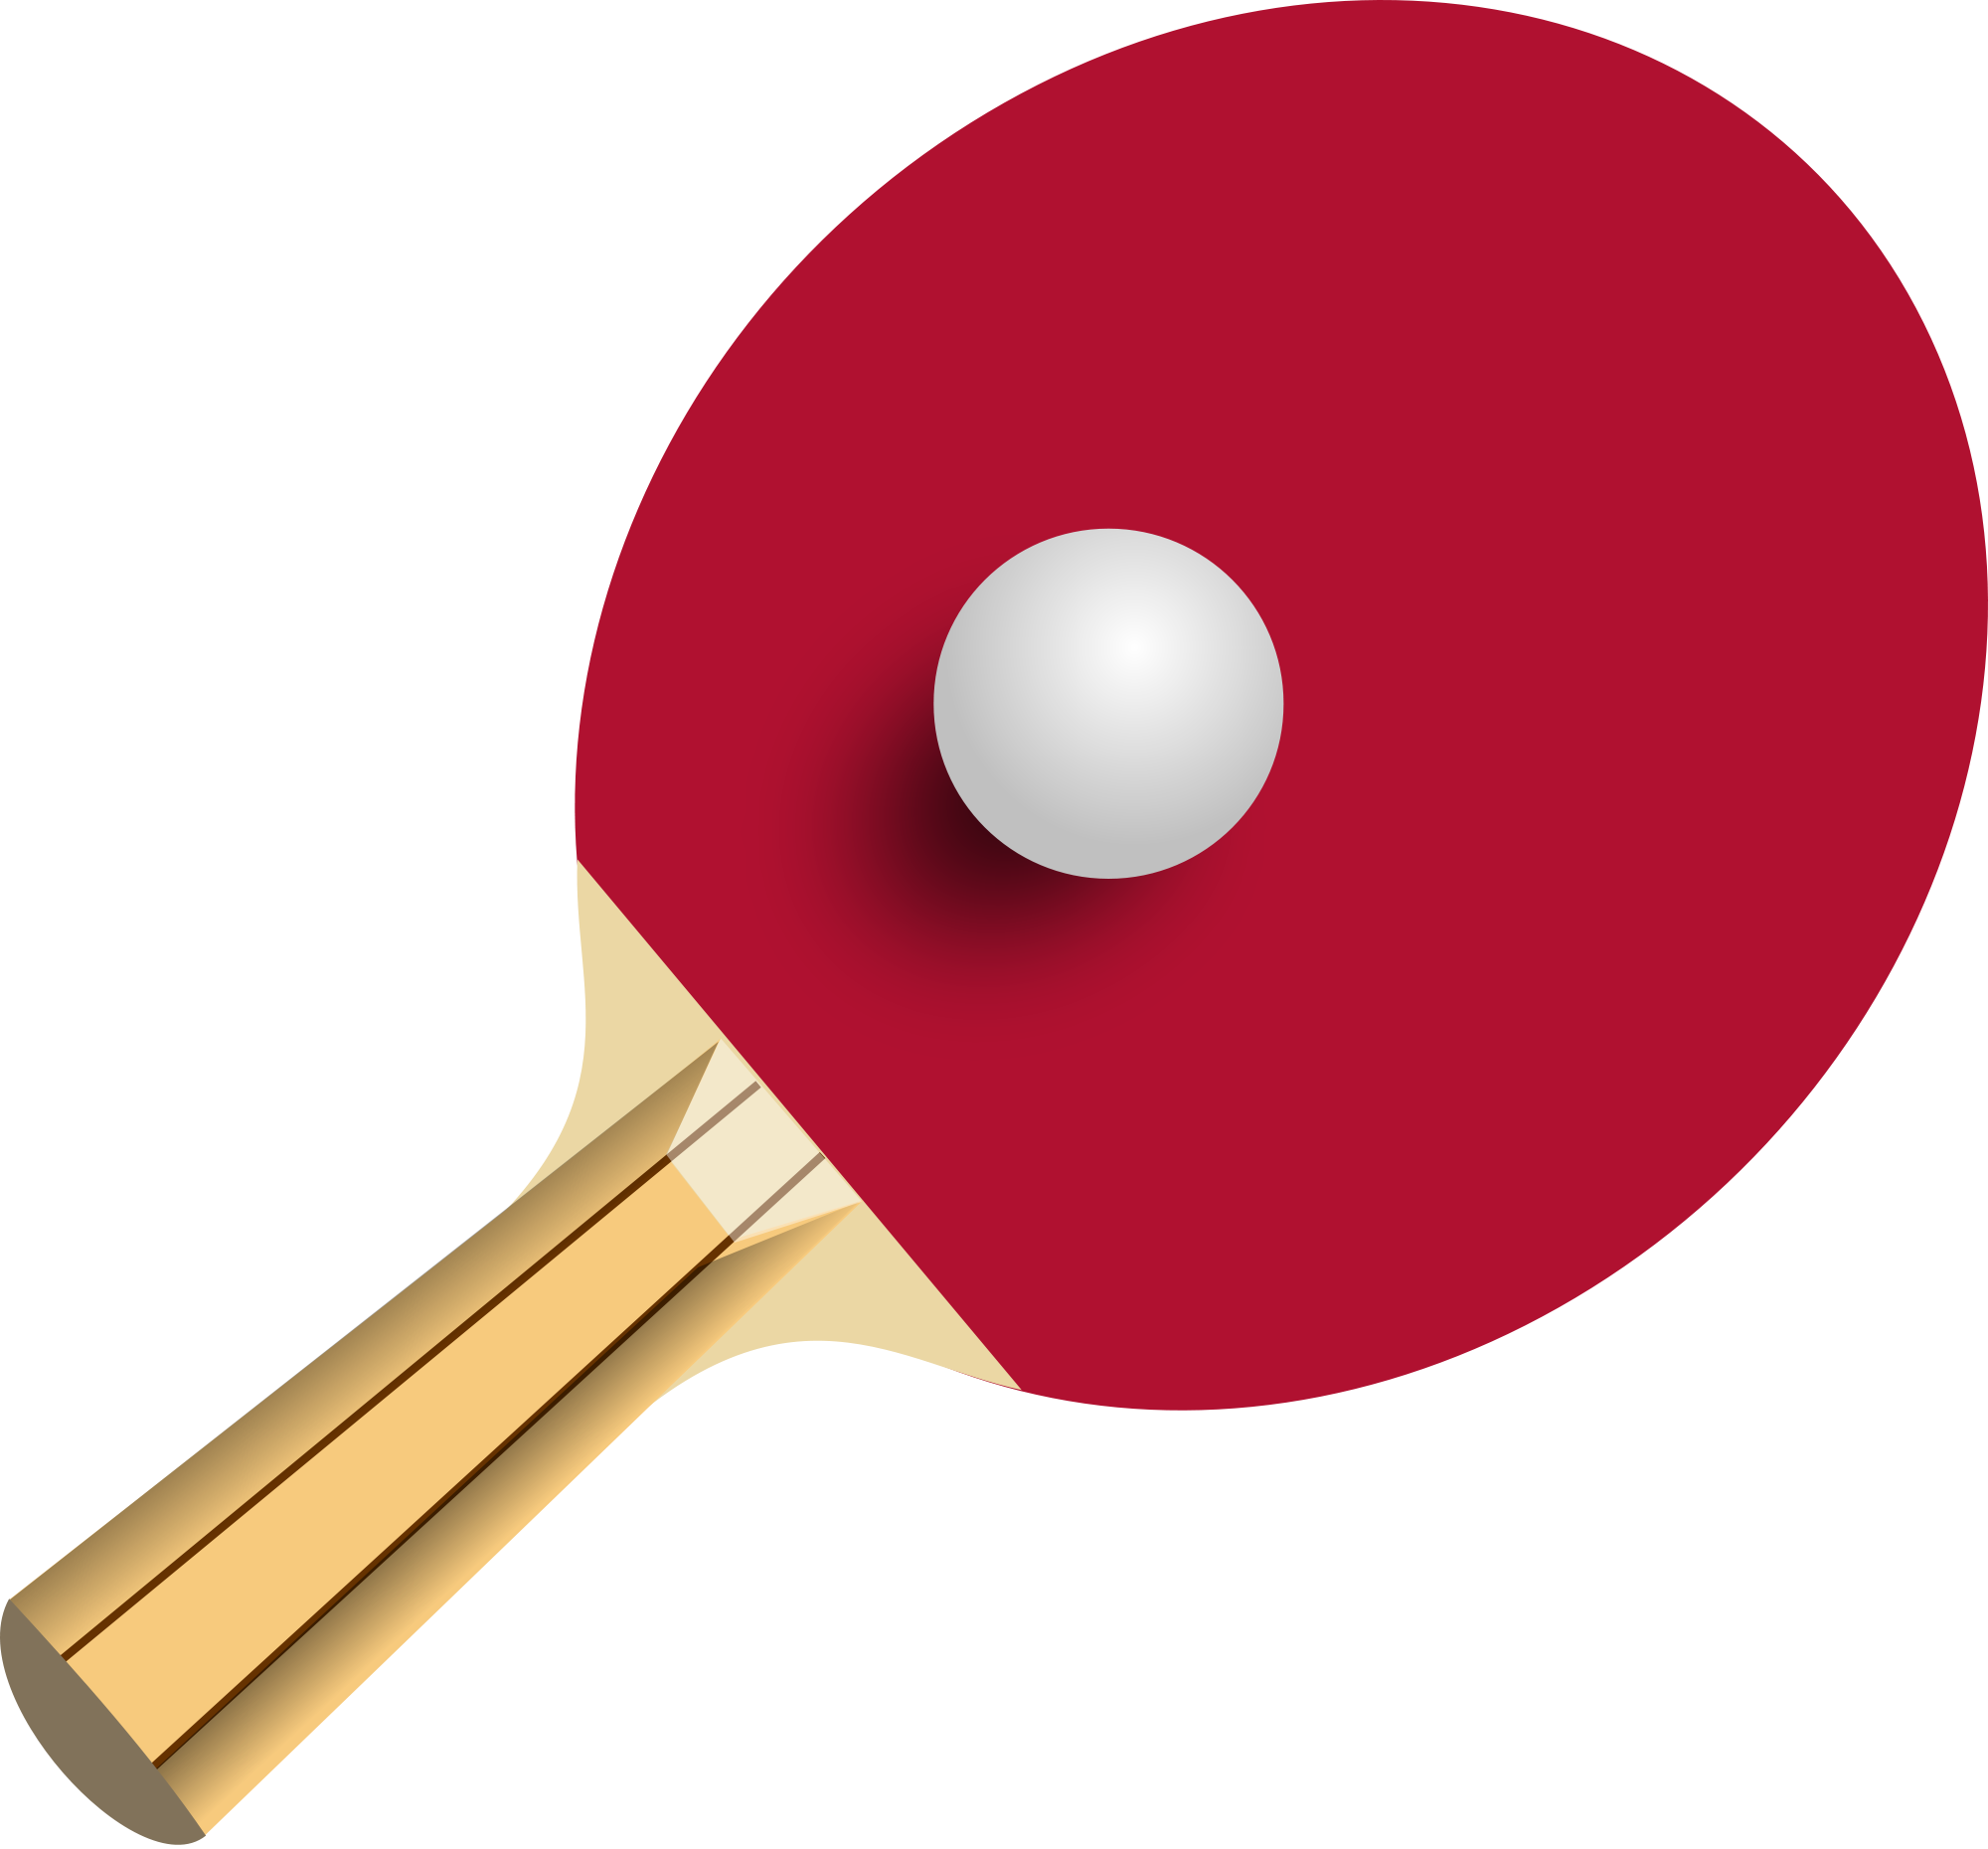 Ping Pong racket PNG image transparent image download, size